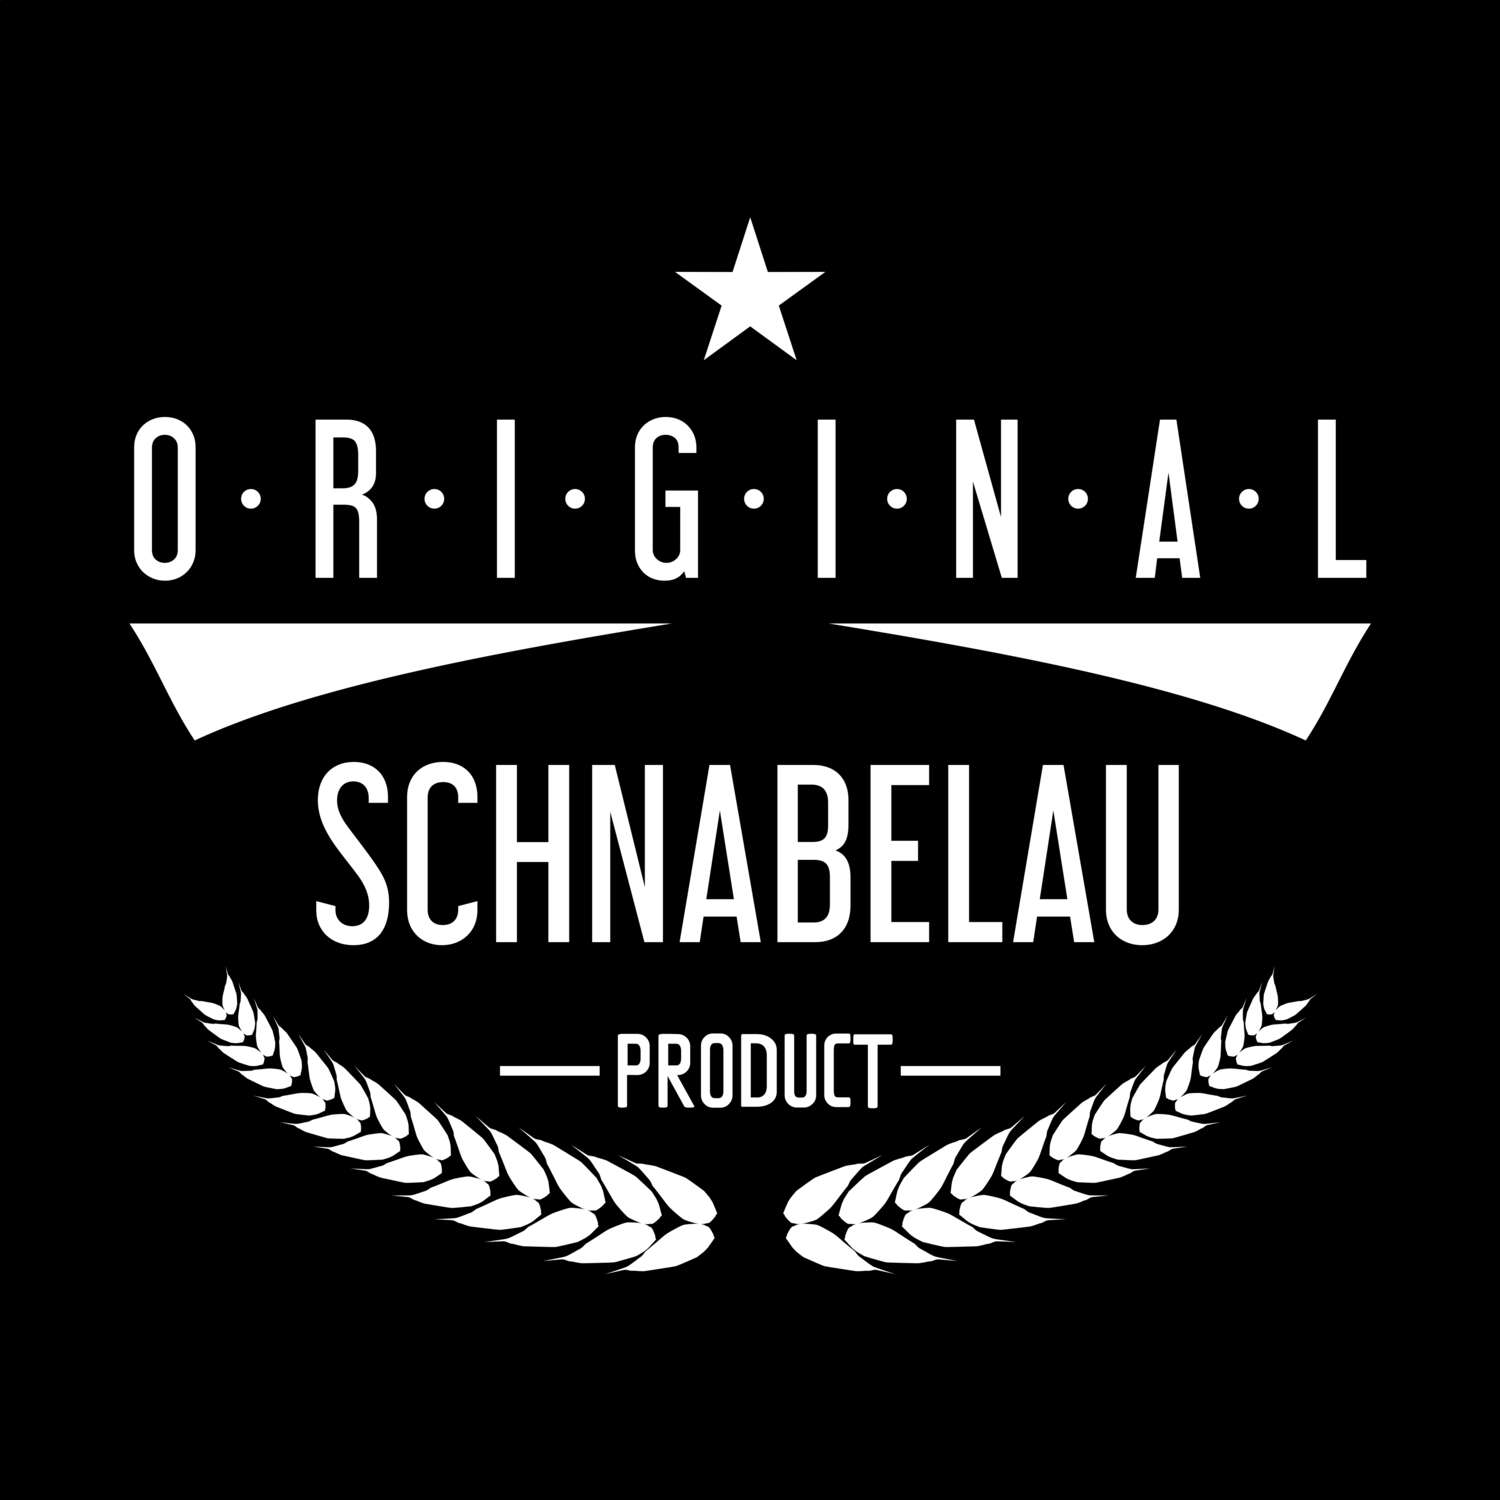 Schnabelau T-Shirt »Original Product«